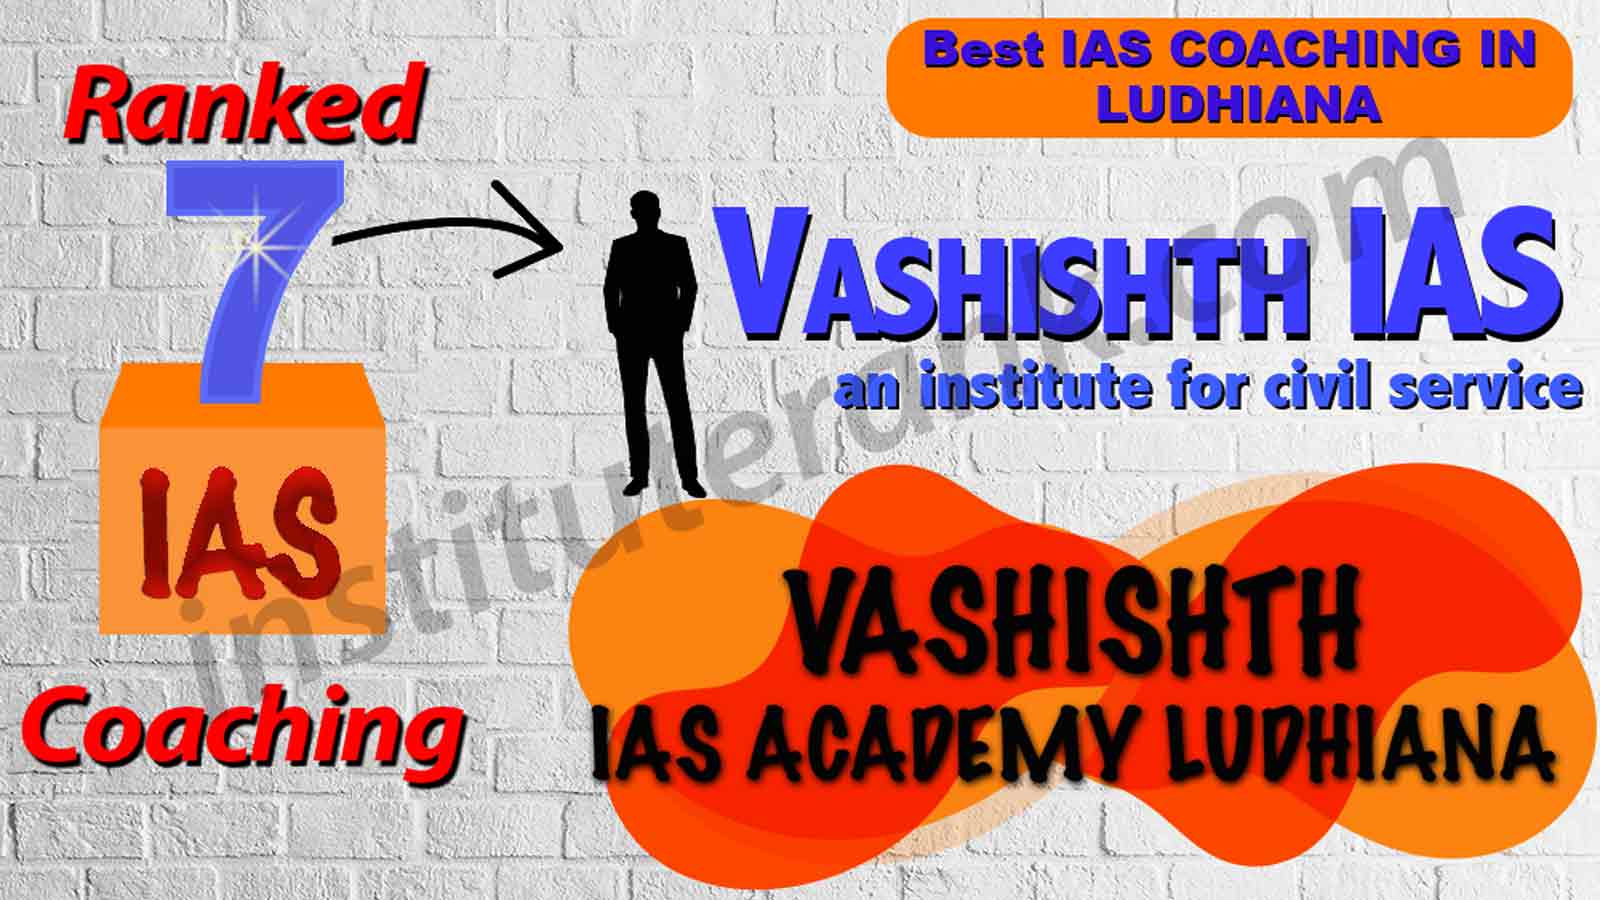 Best IAS Coaching in Ludhiana 